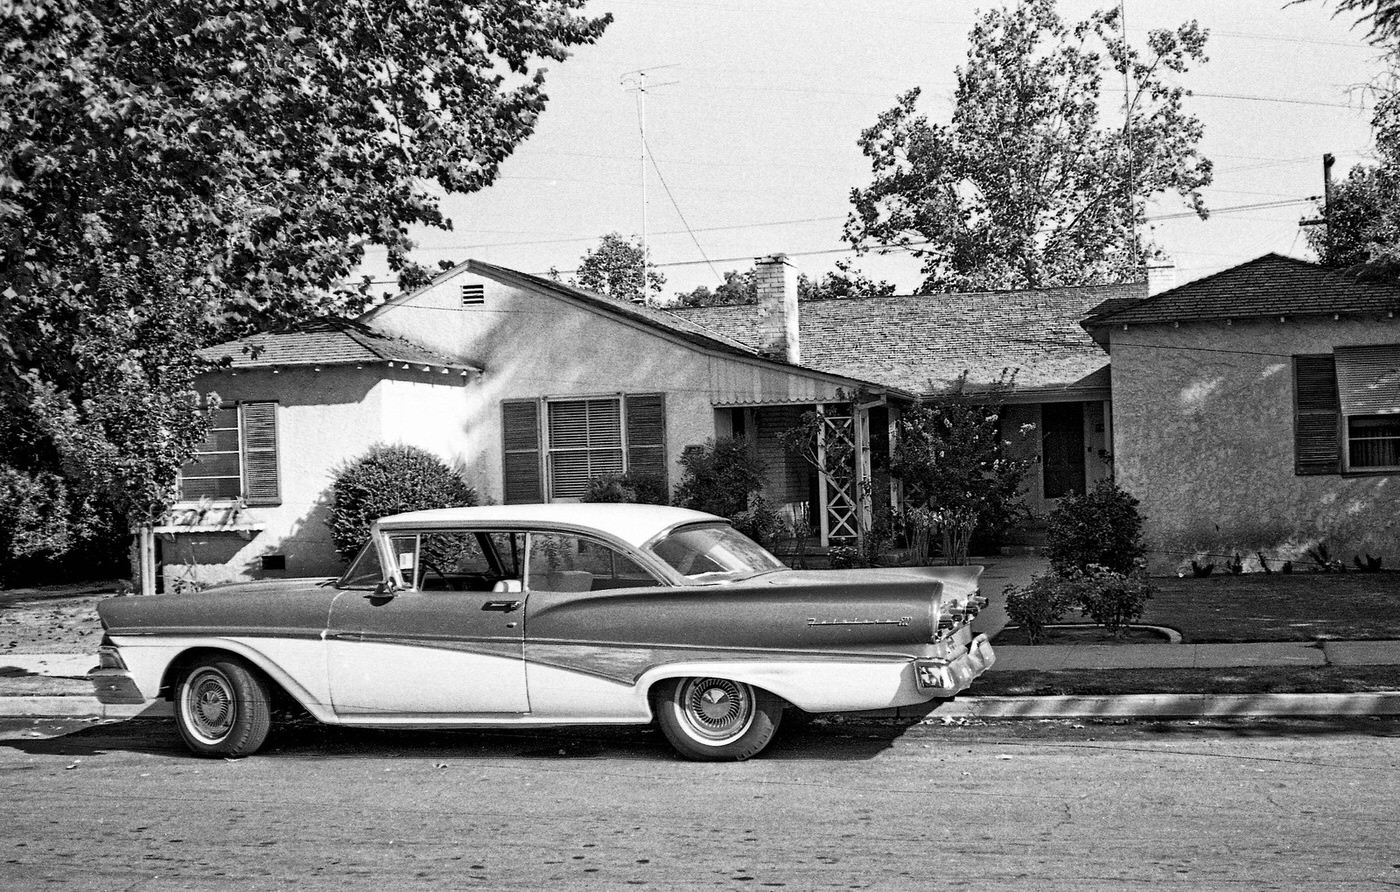 Residential Fresno in mid 1960's